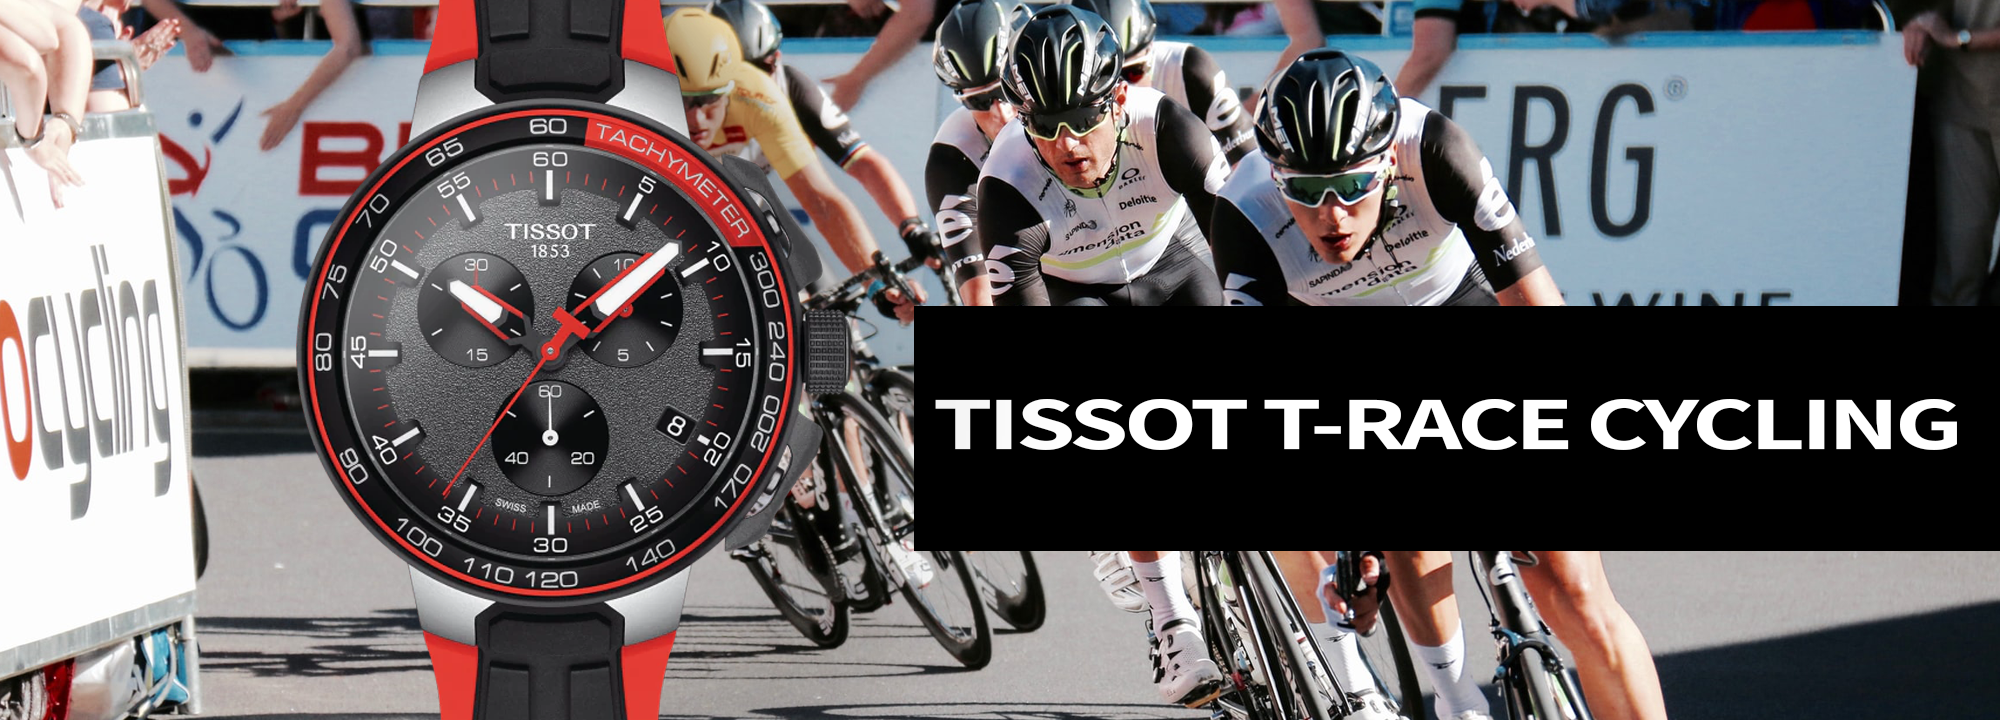 blog tissot t race cycling